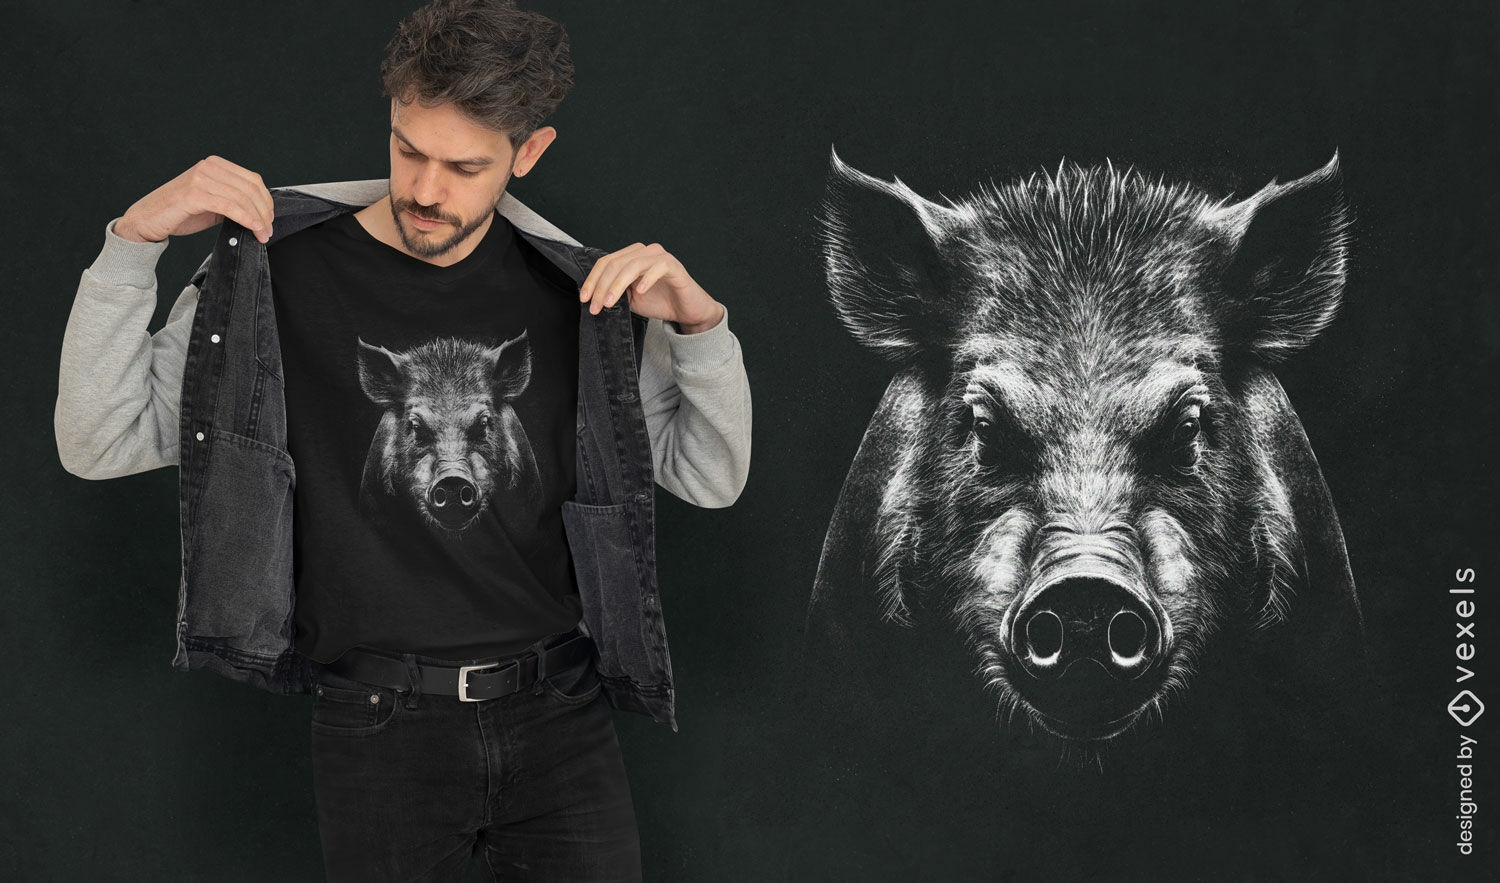 Fierce boar t-shirt design